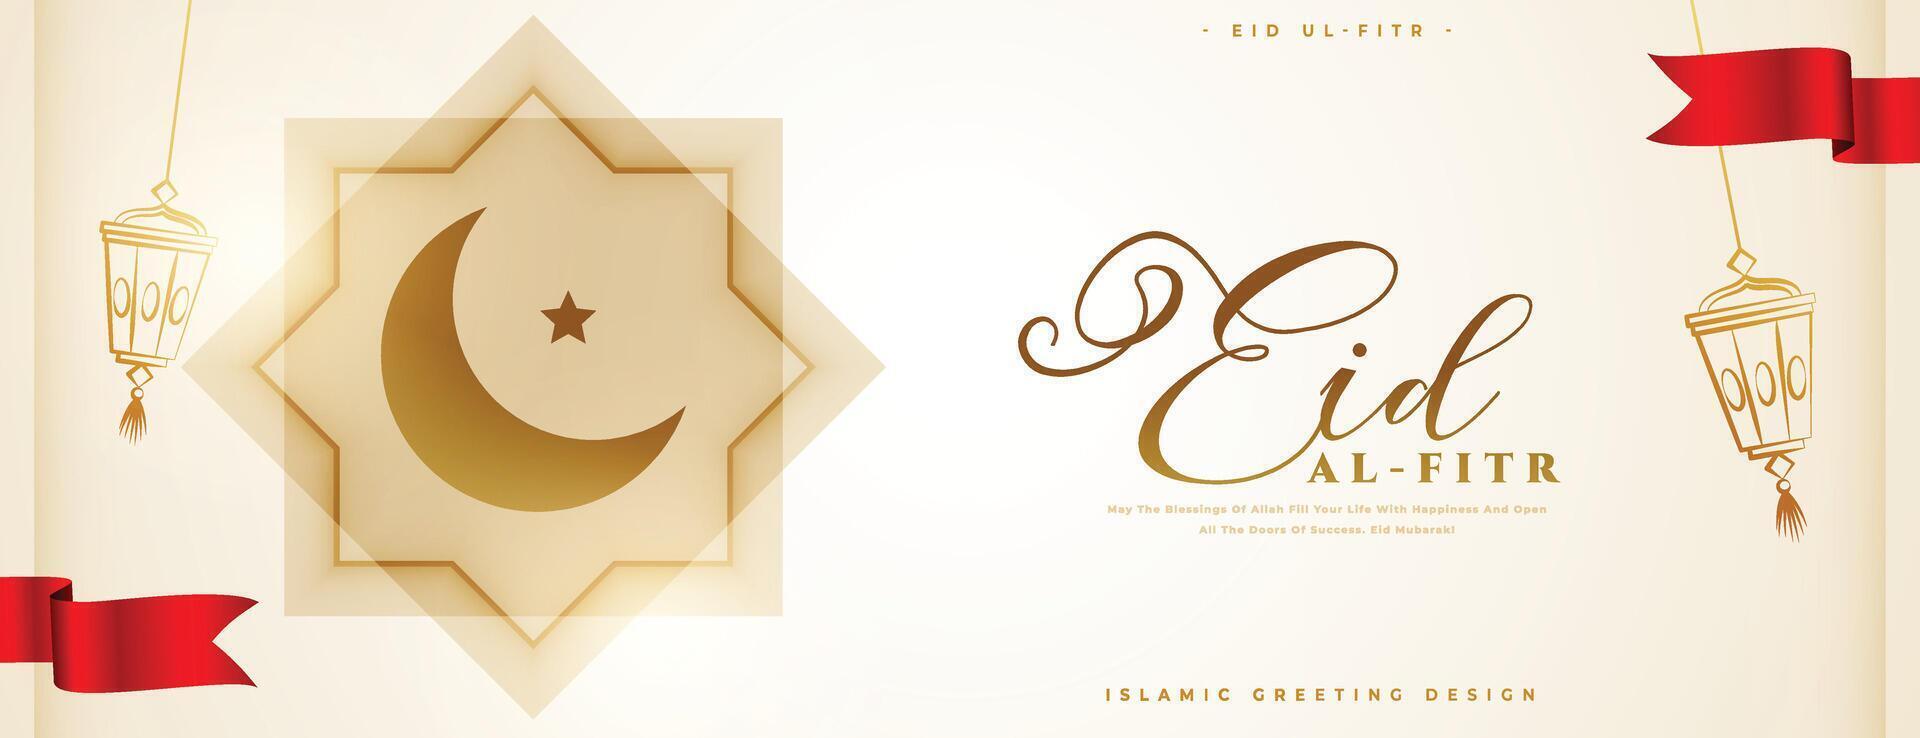 eid al fitr festive celebration wallpaper with arabic decor vector